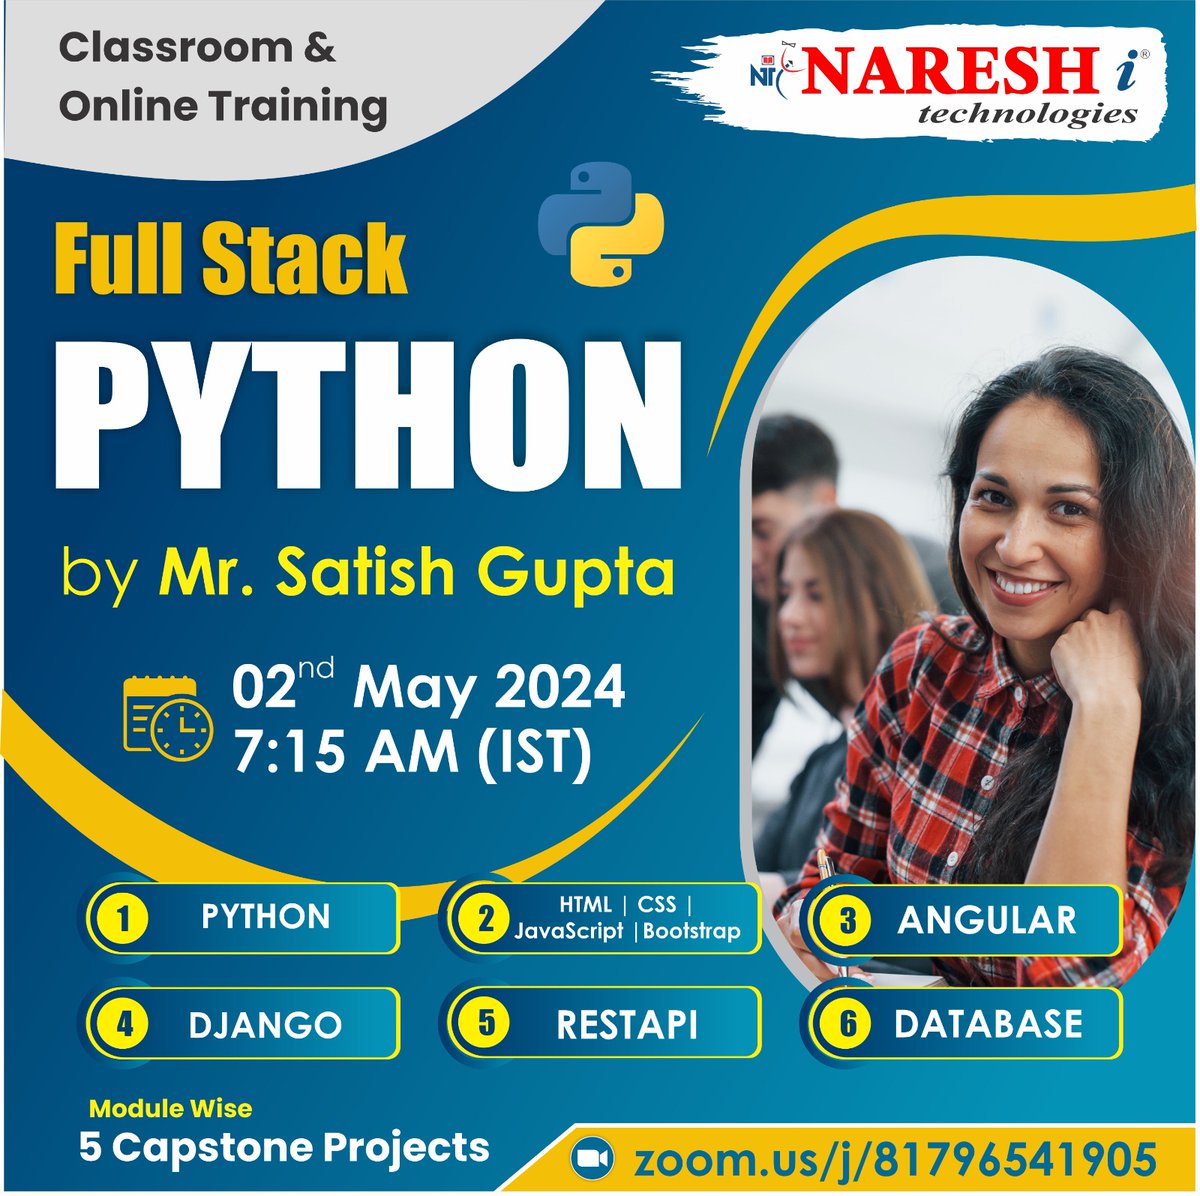 ✍️Enroll Now: bit.ly/3UB7KeA
👉Attend Free Demo On Full Stack Python by Mr.Satish Gupta
📅Demo on: 2nd May @ 7:15 AM (IST).

#Python #numpy #pandas #programming #sql #courses #software #learnfromhome #Angular #html #css #javascript #django #nareshit